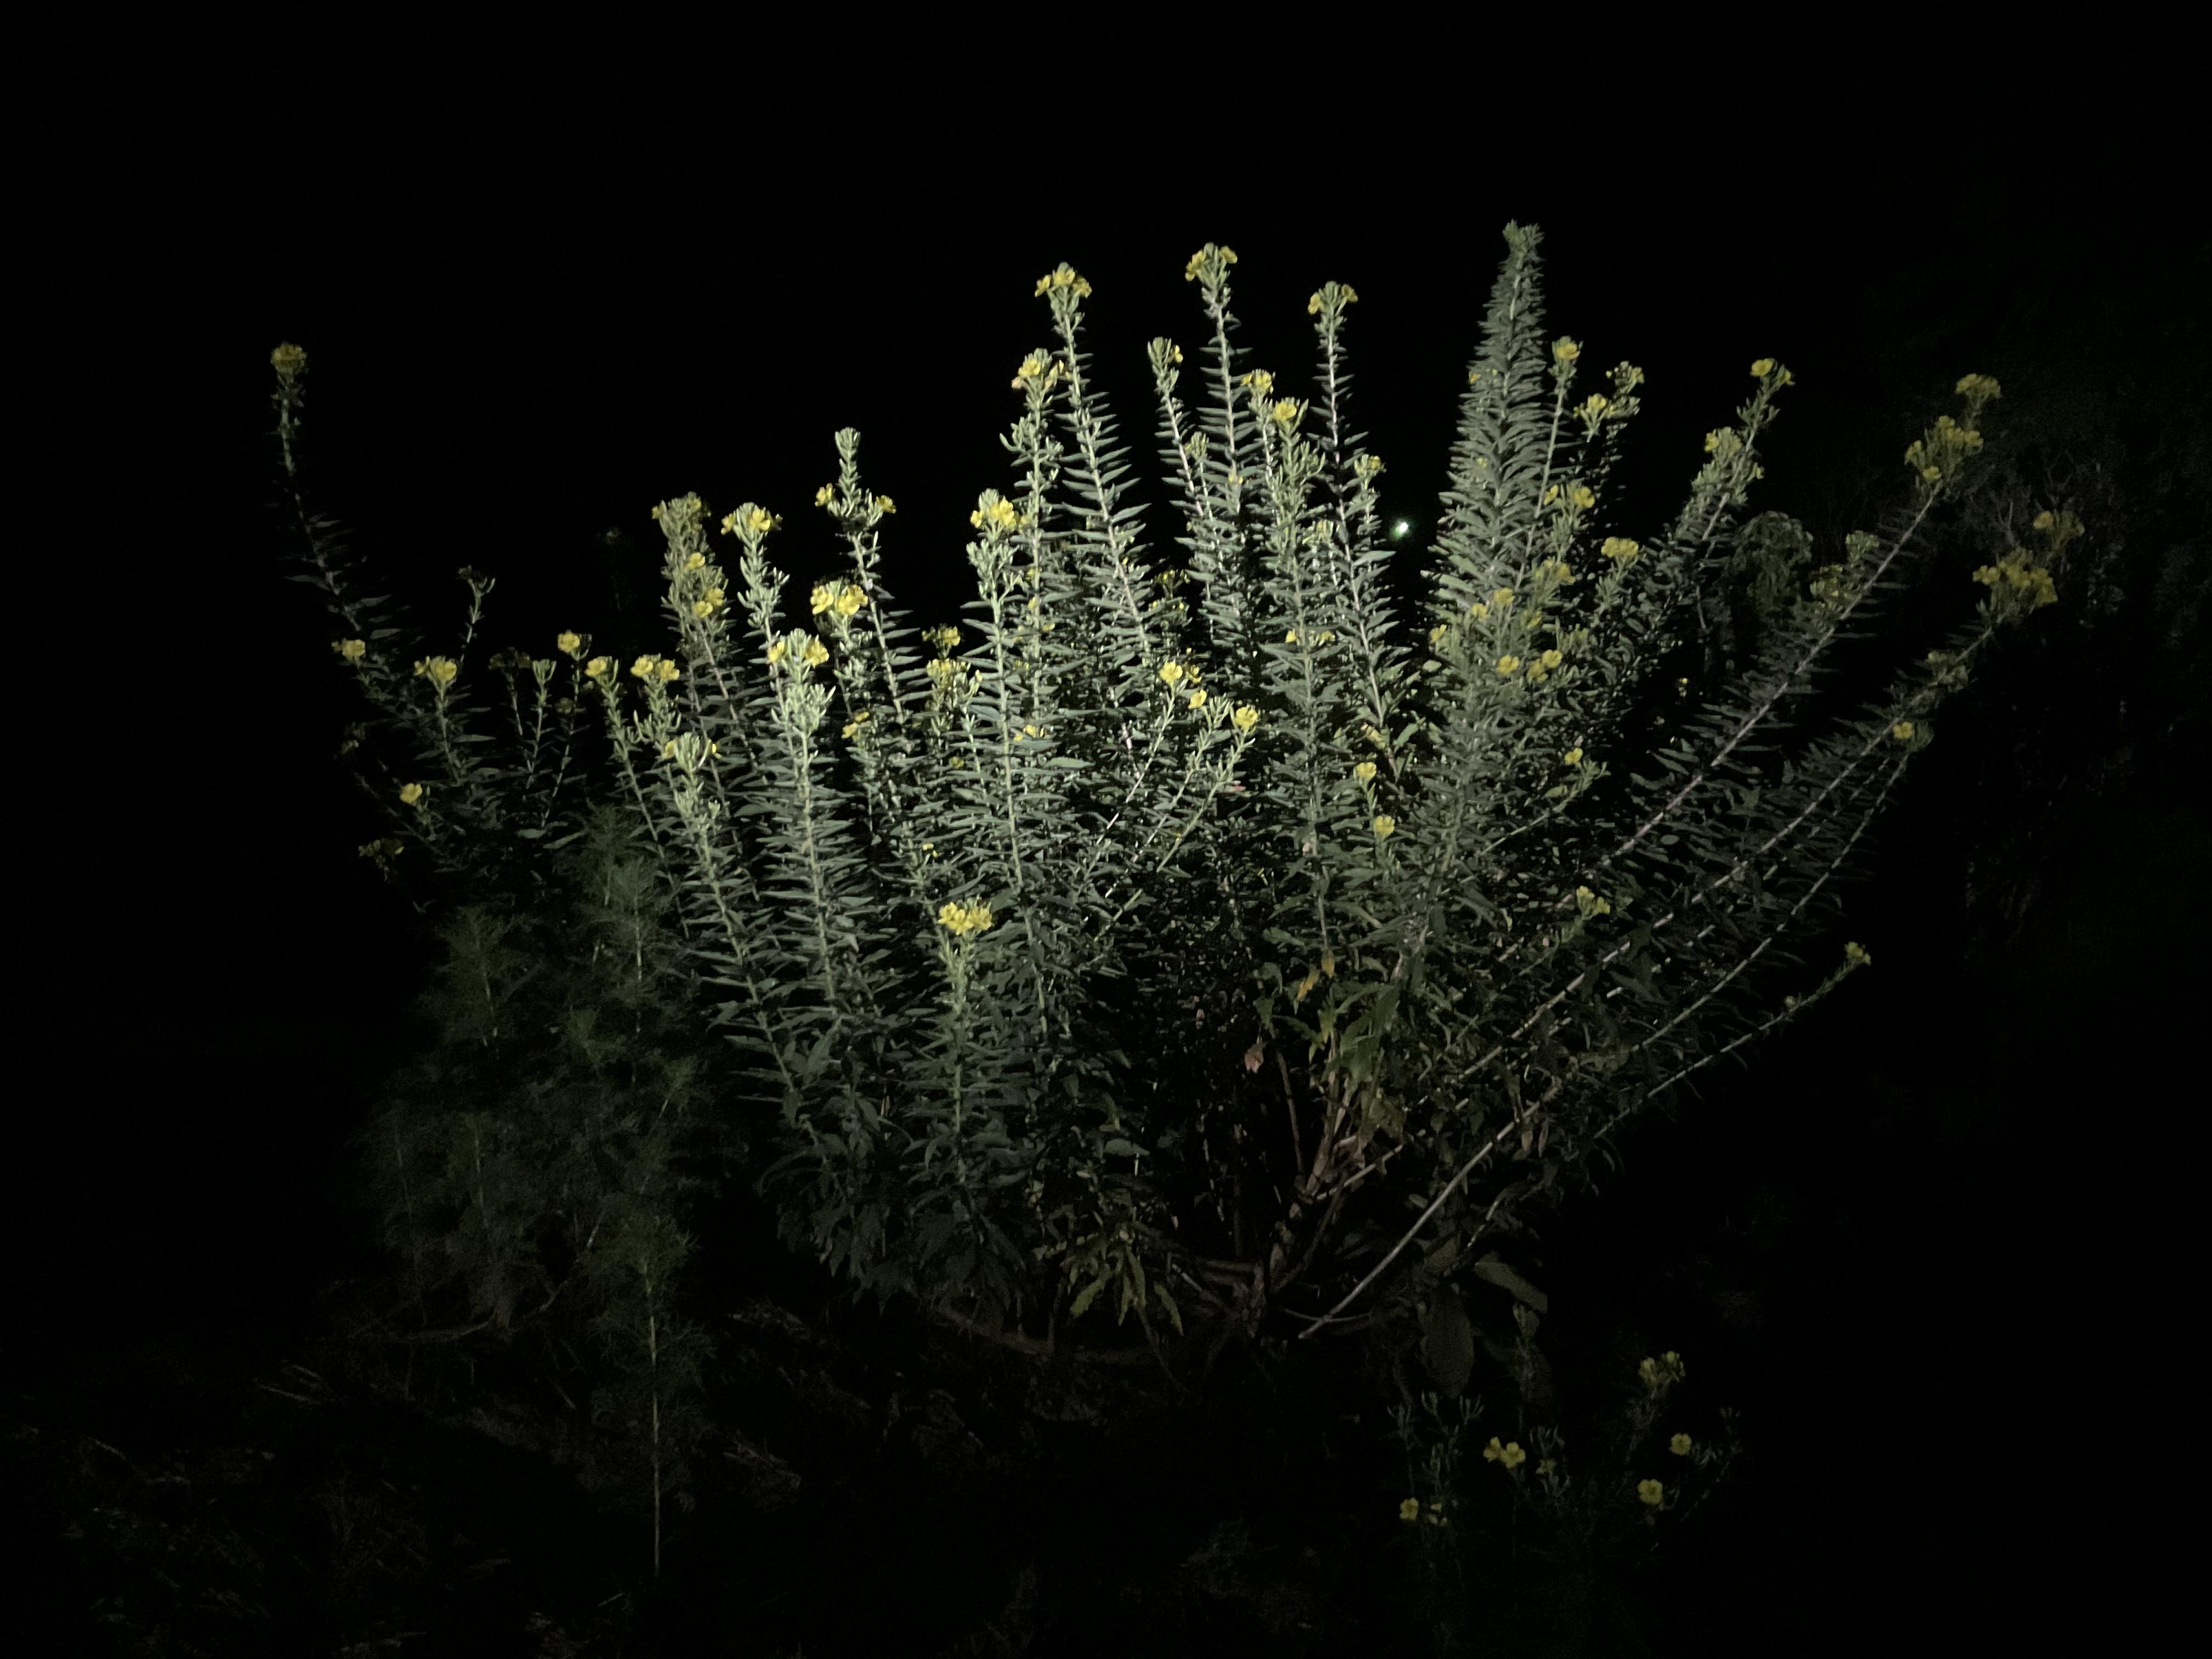 Evening Primrose Flowers on the plant